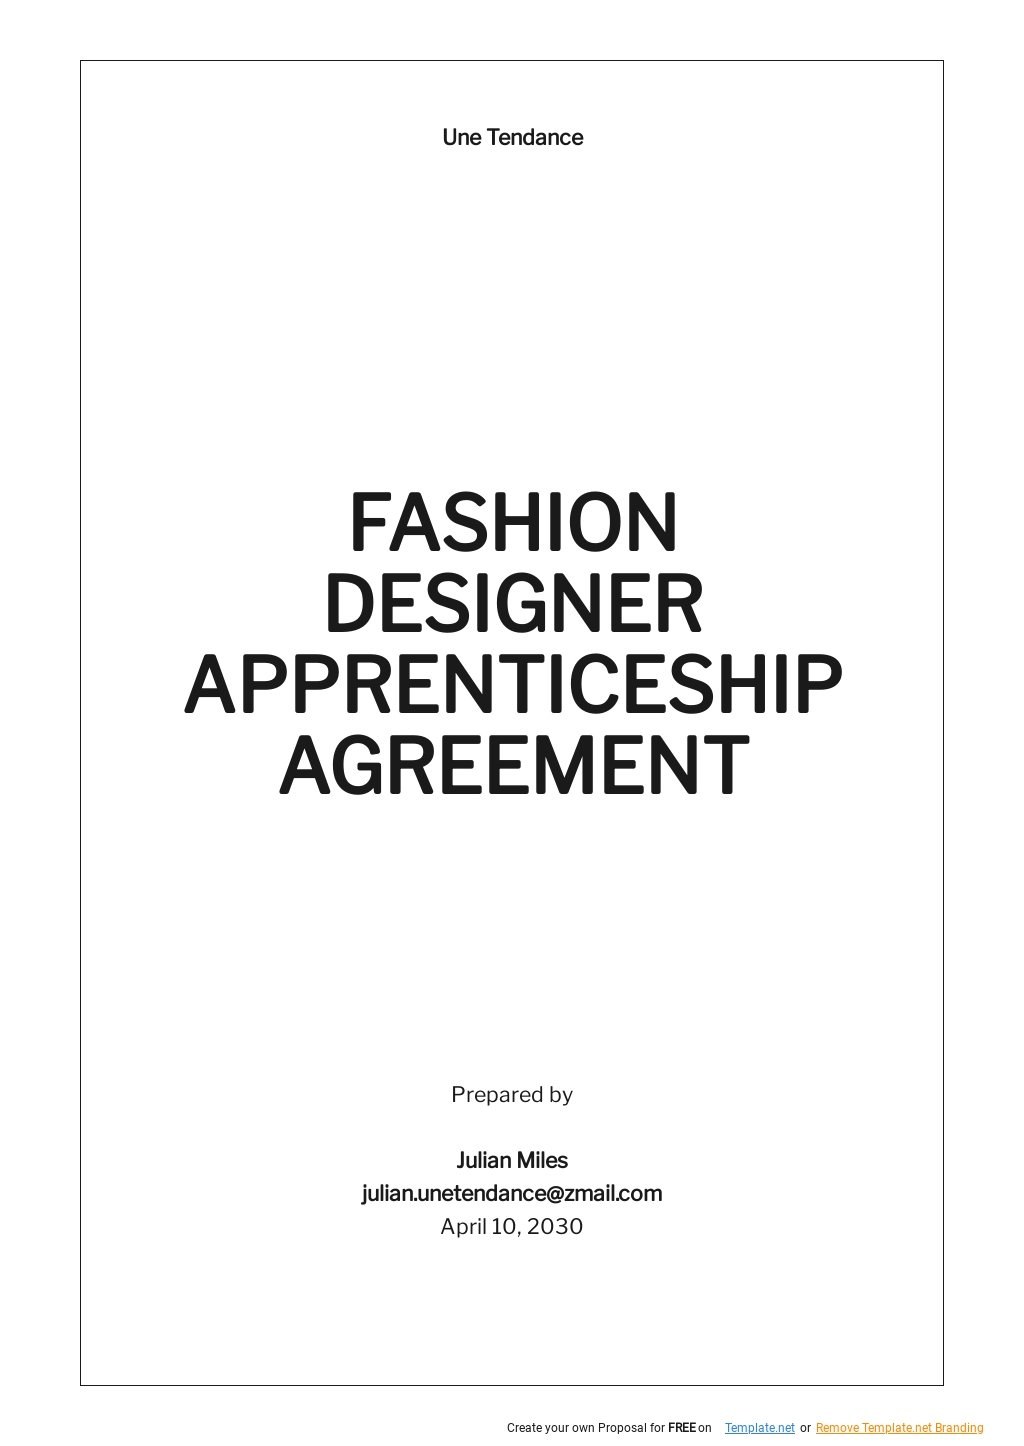 fashion designer contract template - Fashion Designer Apprenticeship Agreement Template - Google Docs